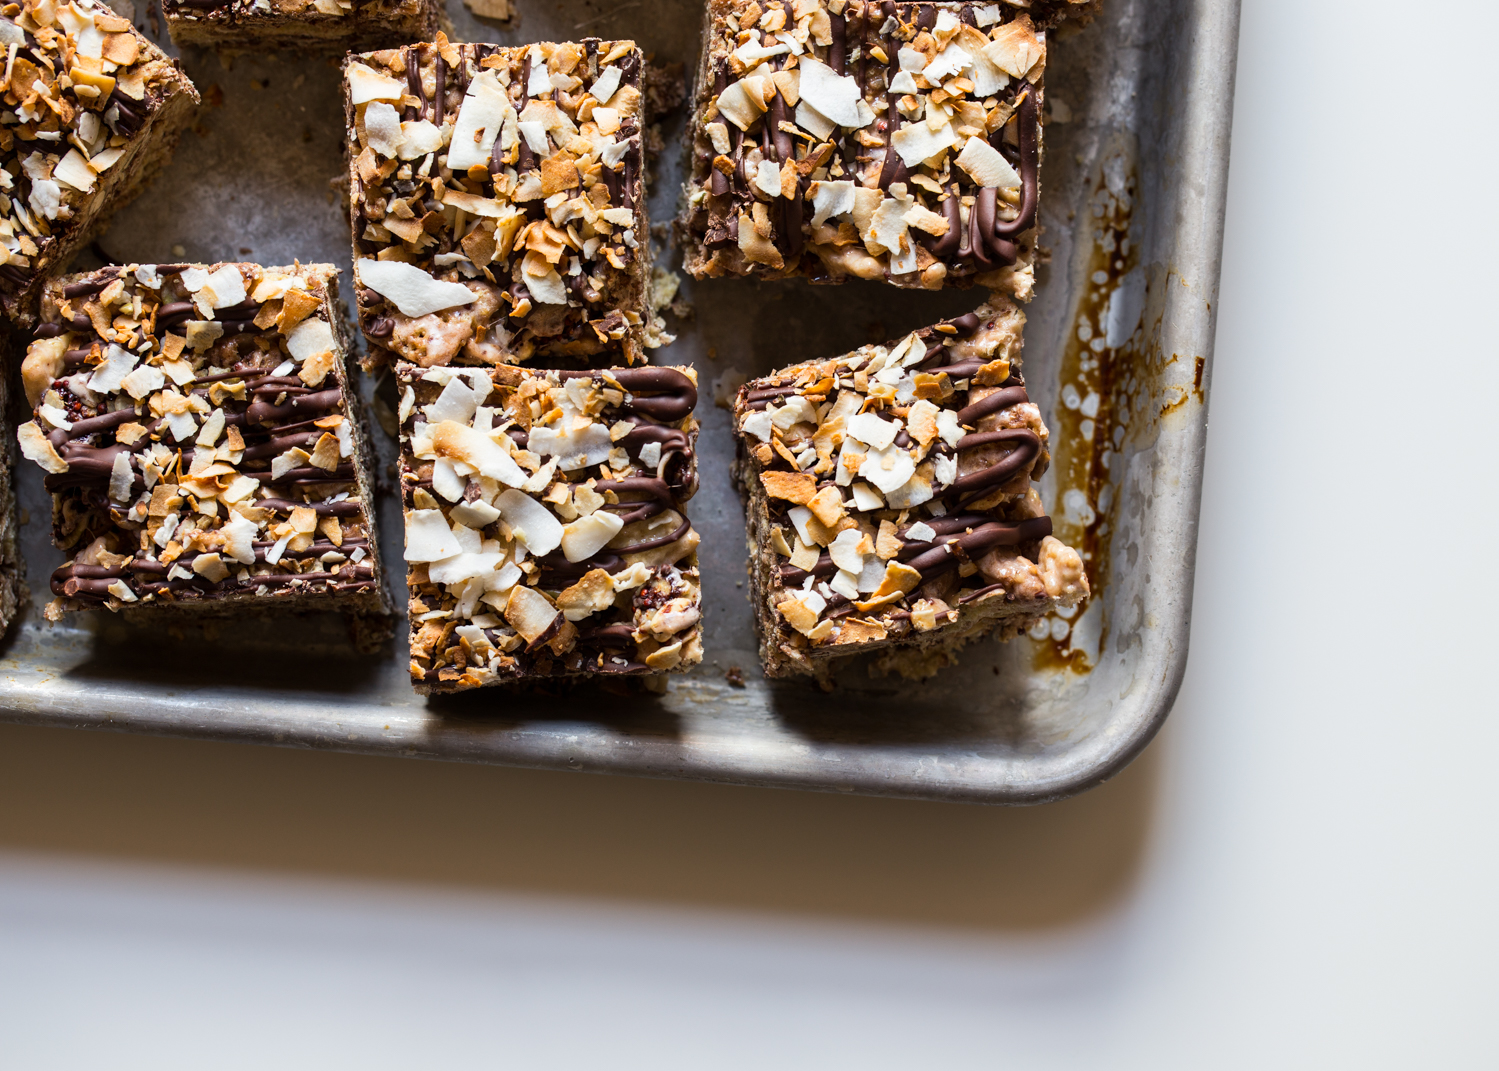 Chocolate Coconut Marshmallow Treats are no-bake and gluten free